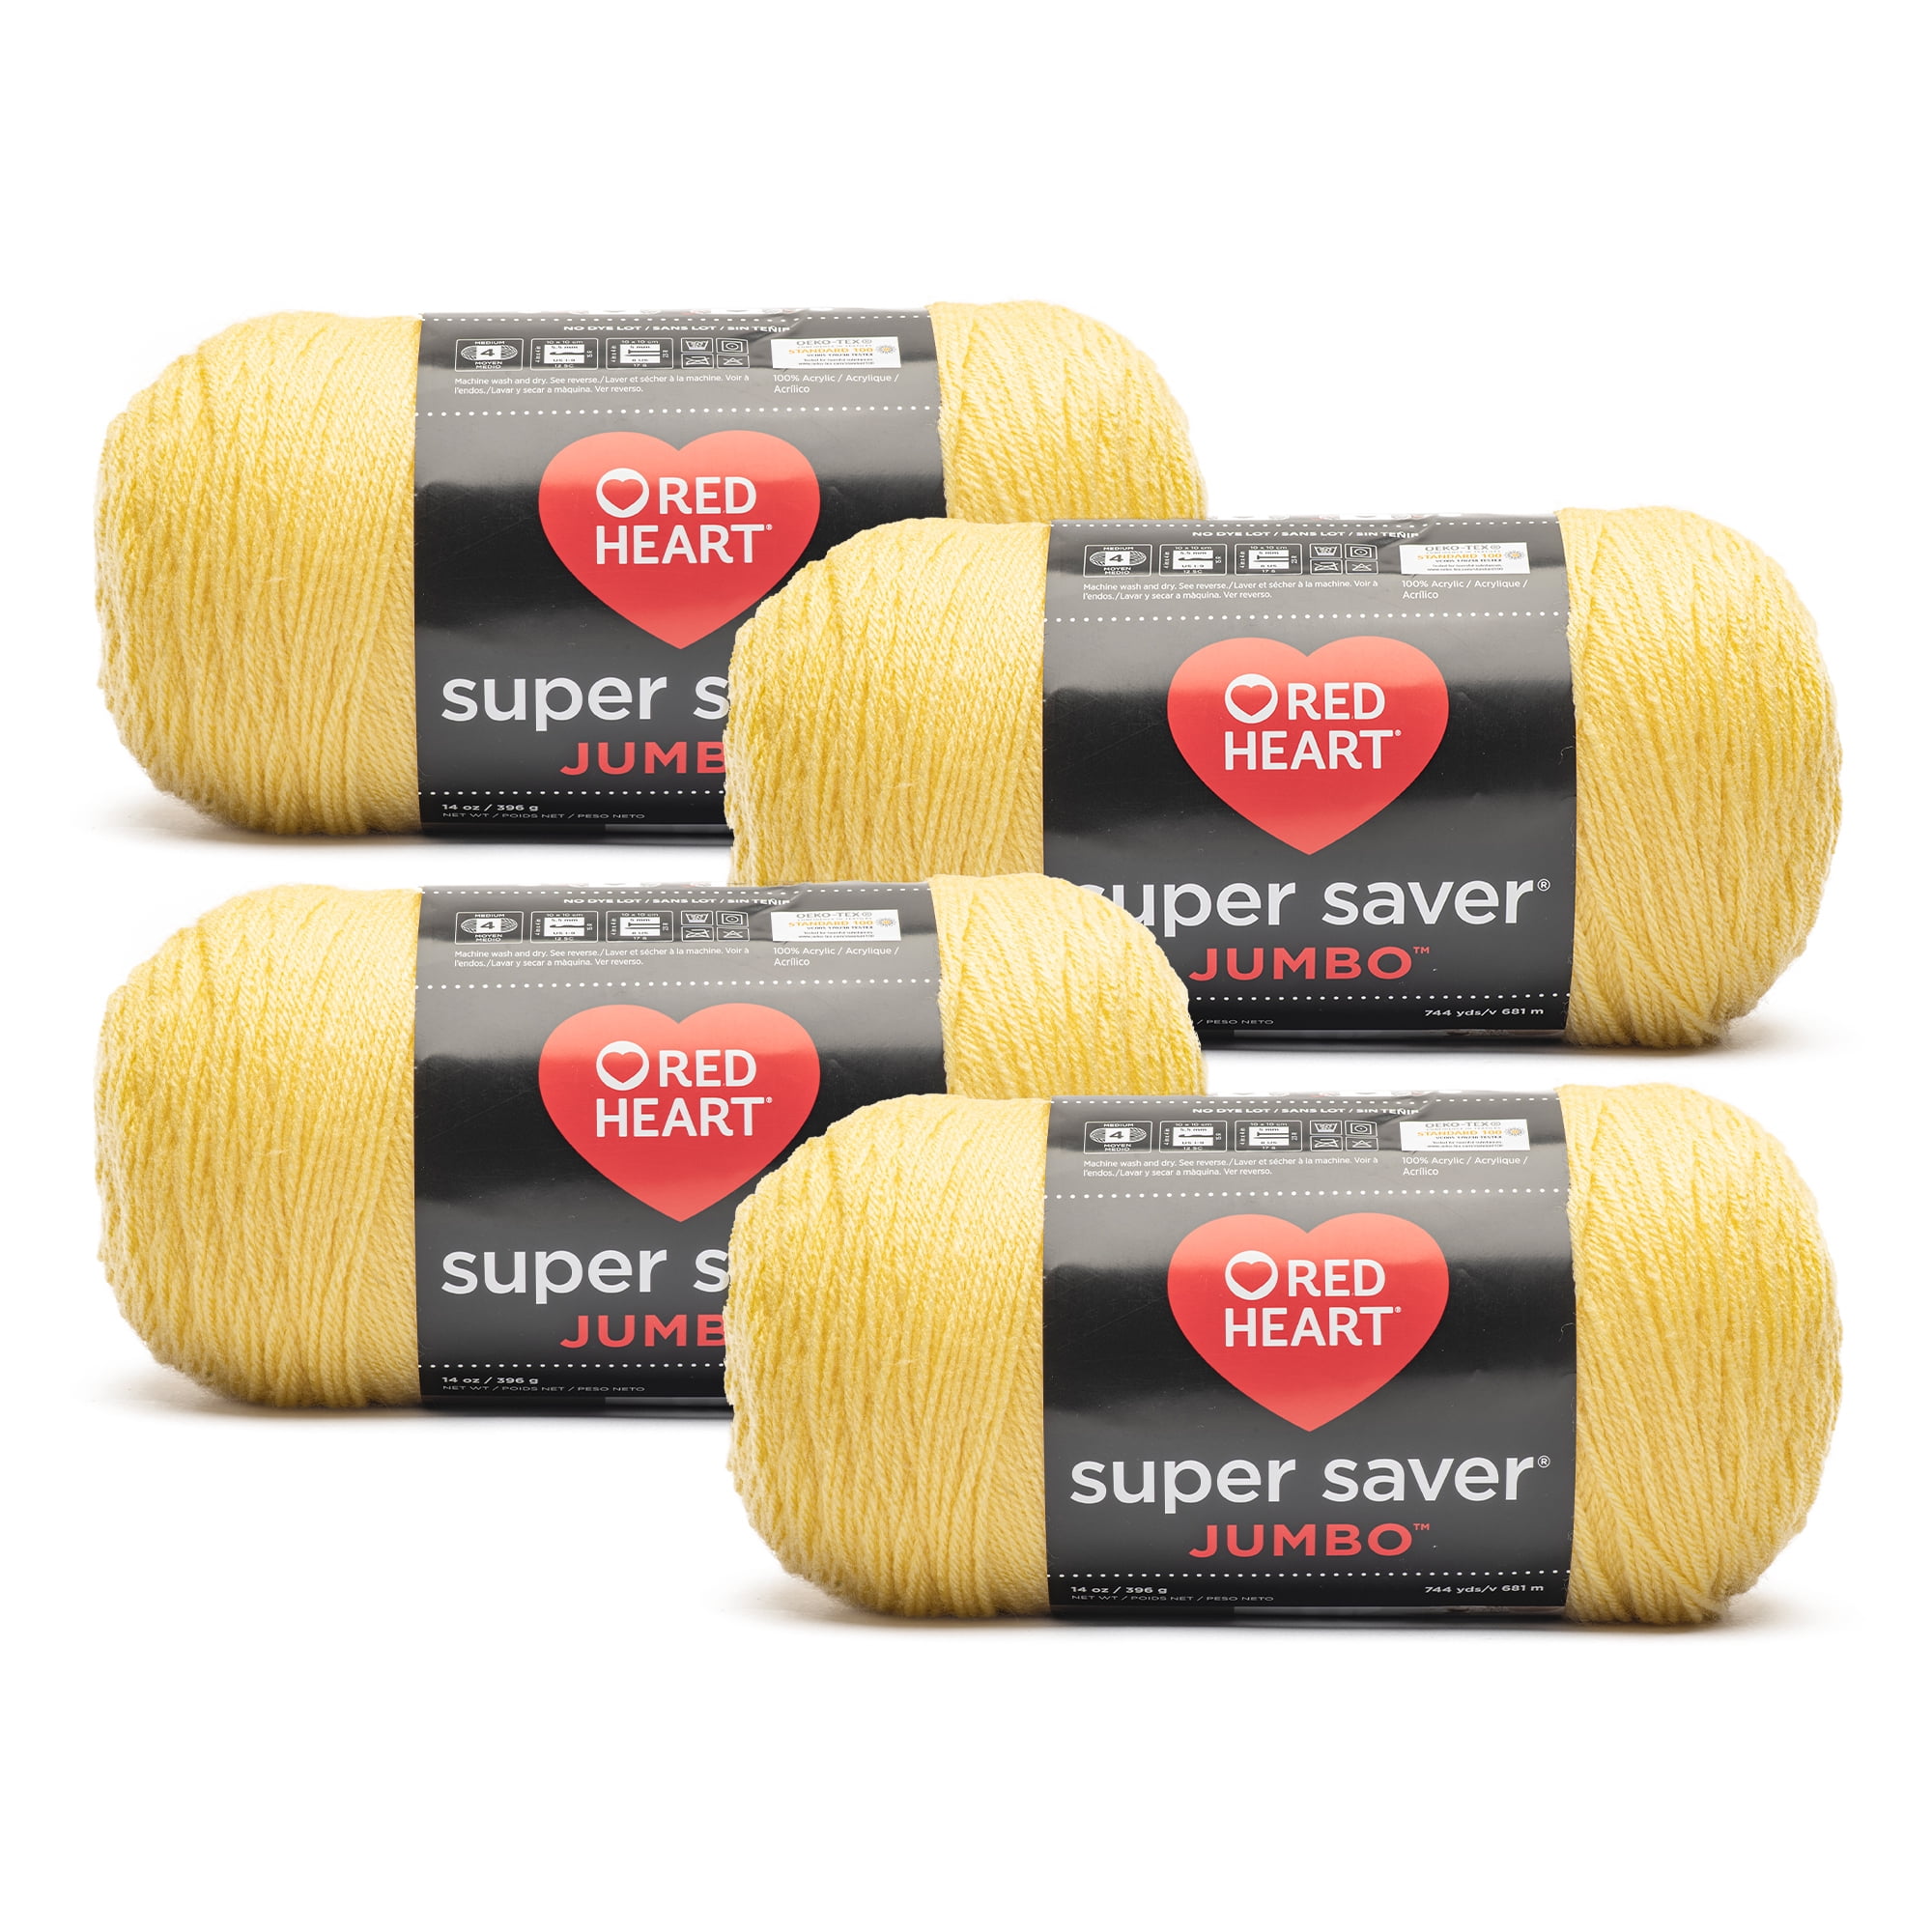 Red Heart Super Saver Jumbo Gold Yarn - 2 Pack of 14oz/396g - Acrylic - 4  Medium (Worsted) - 744 Yards - Knitting/Crochet